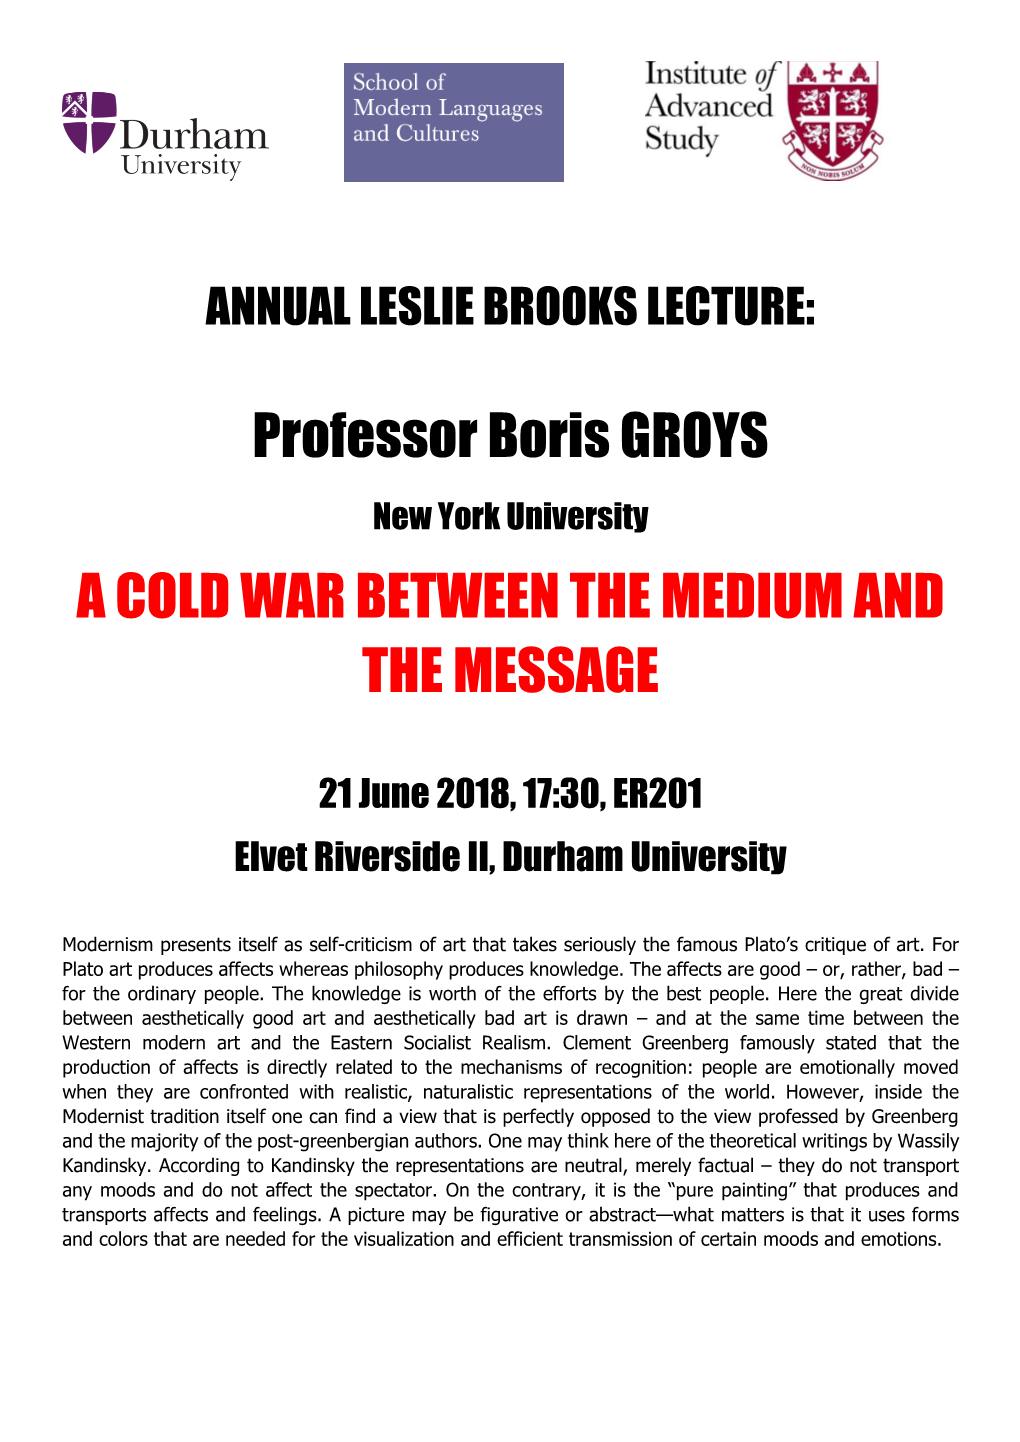 Professor Boris GROYS a COLD WAR BETWEEN the MEDIUM and the MESSAGE